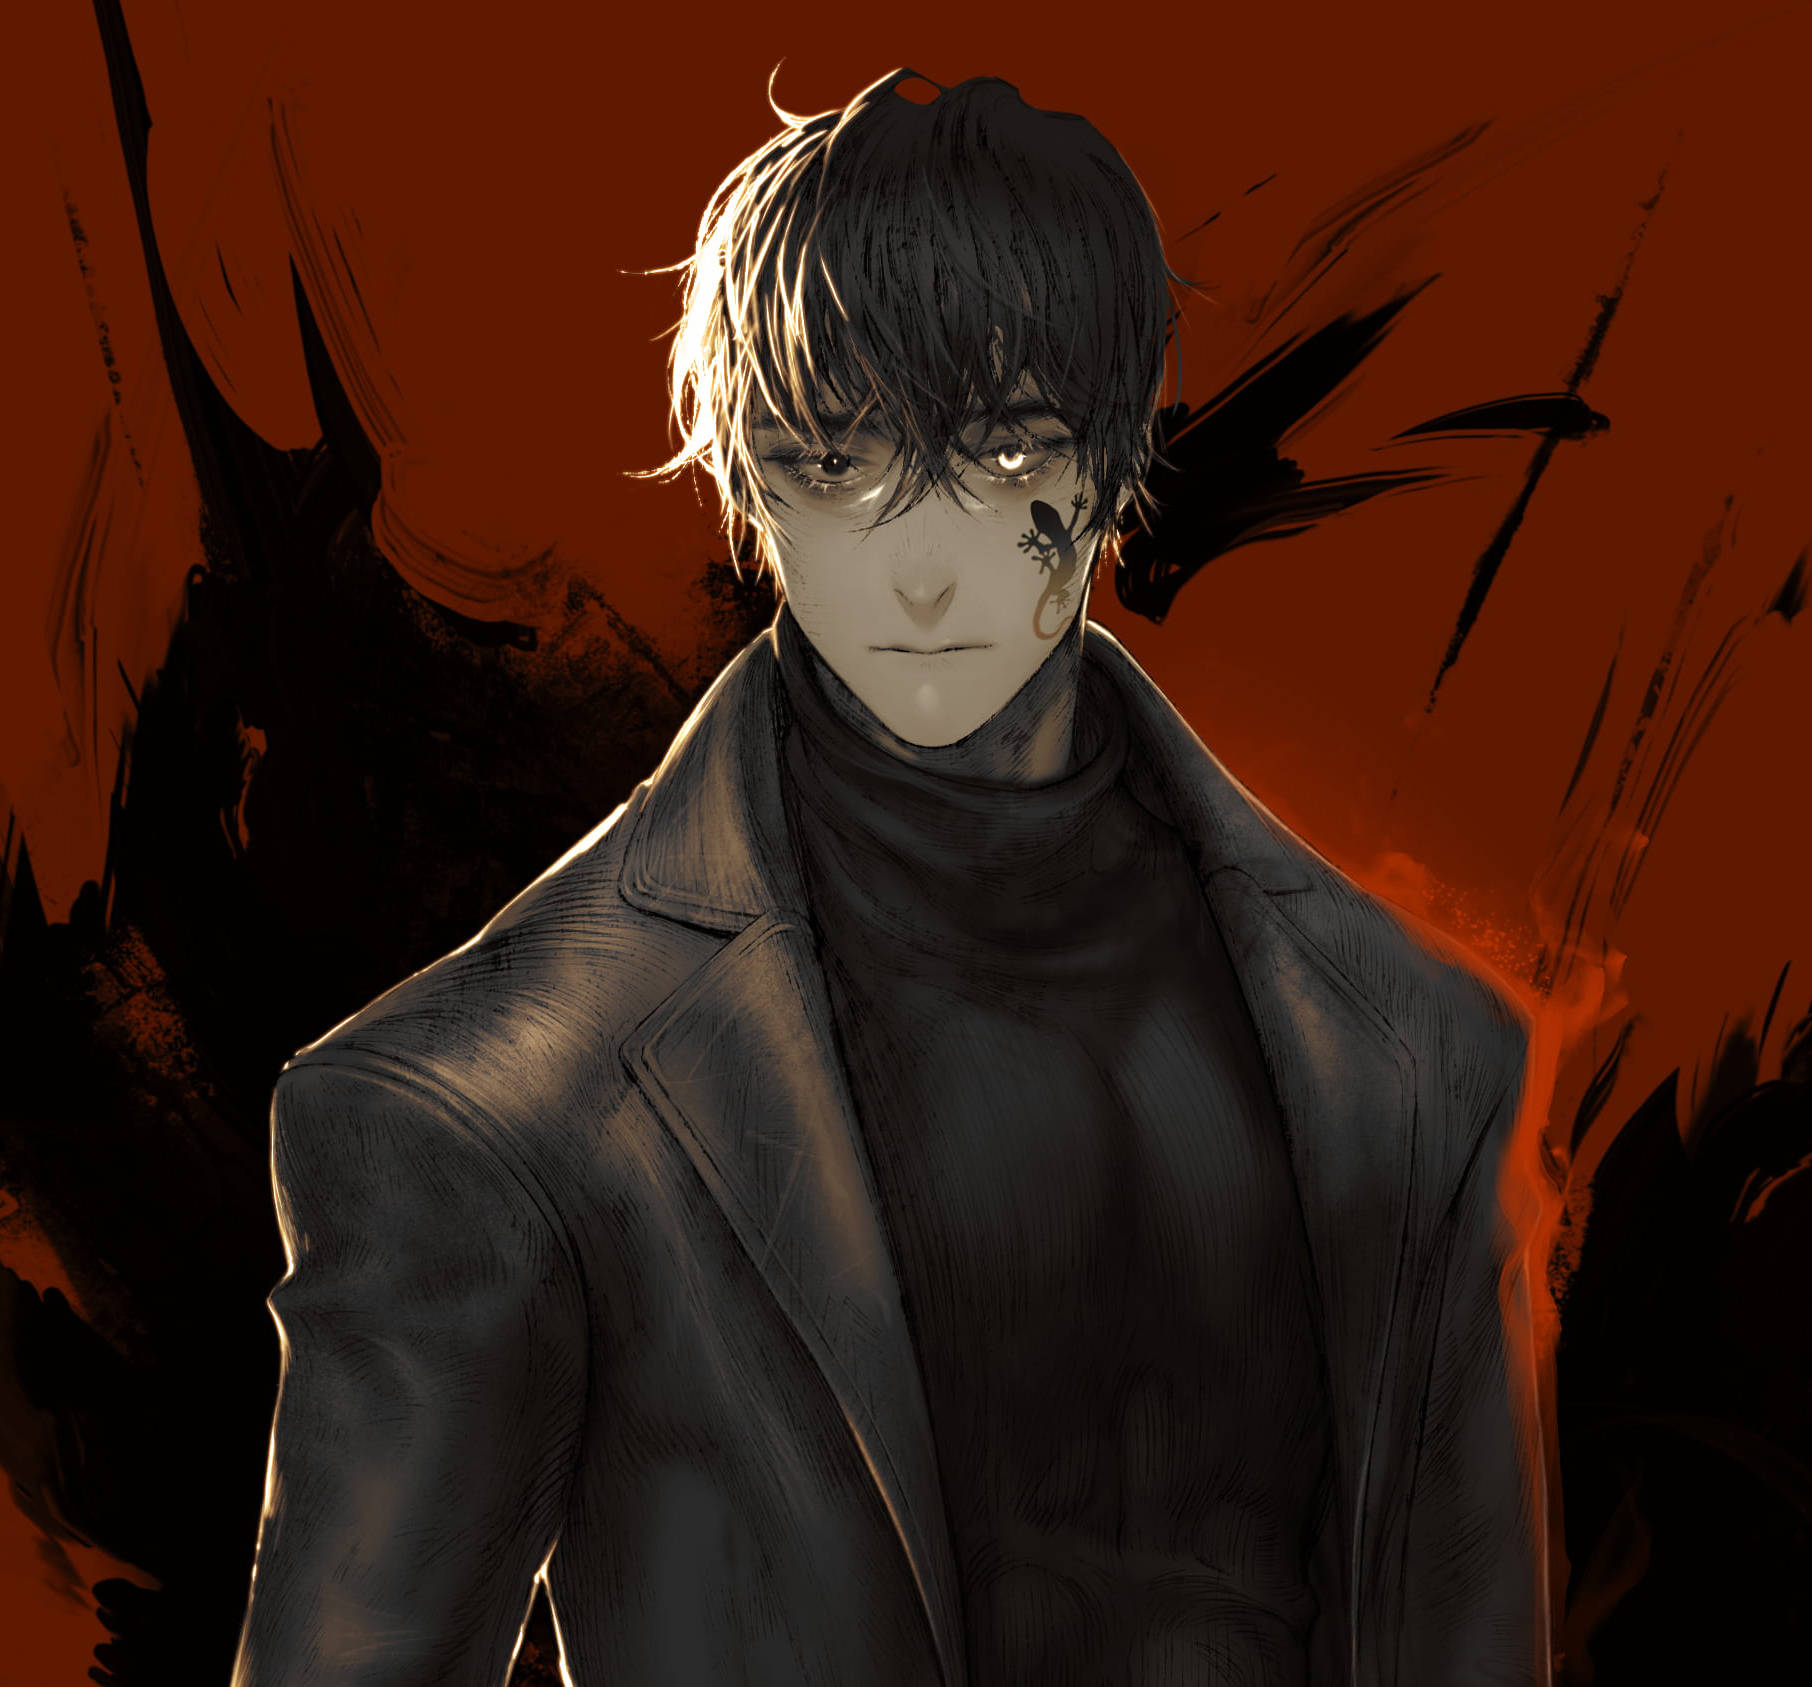 Aesthetic Anime Boy Icon Dark Clothes Wallpaper